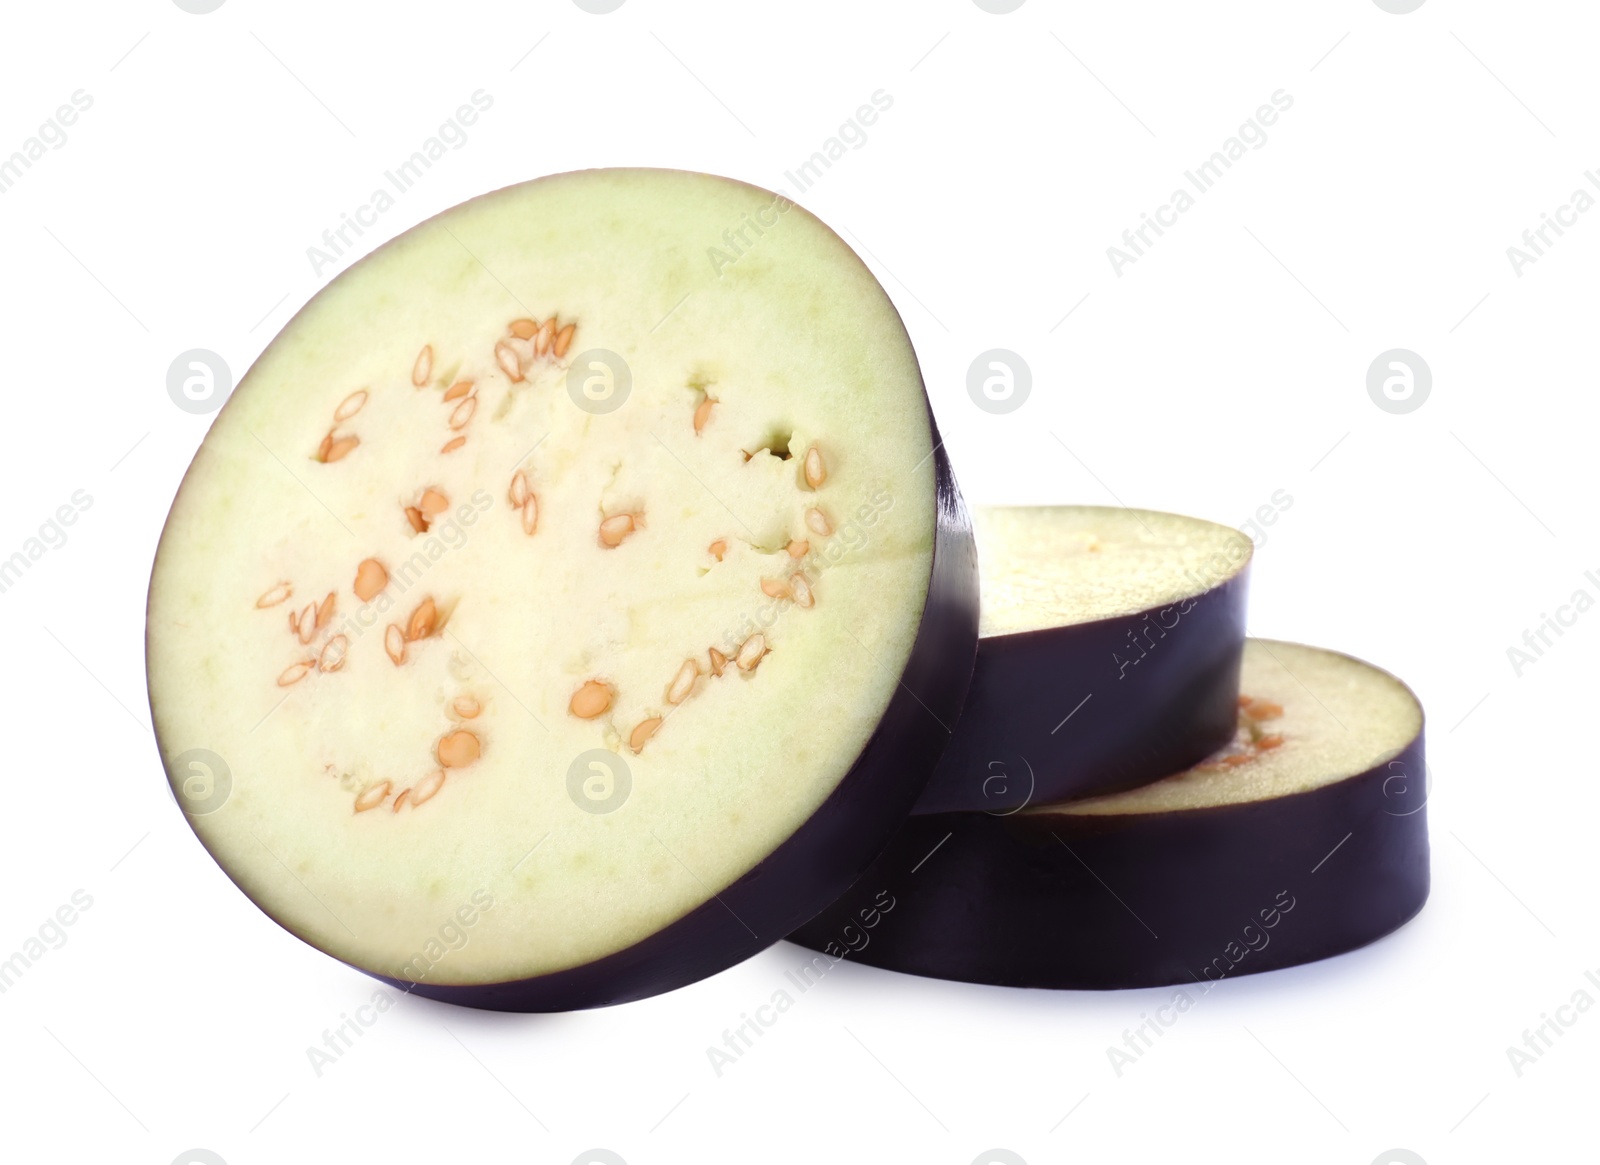 Photo of Slices of ripe eggplant isolated on white